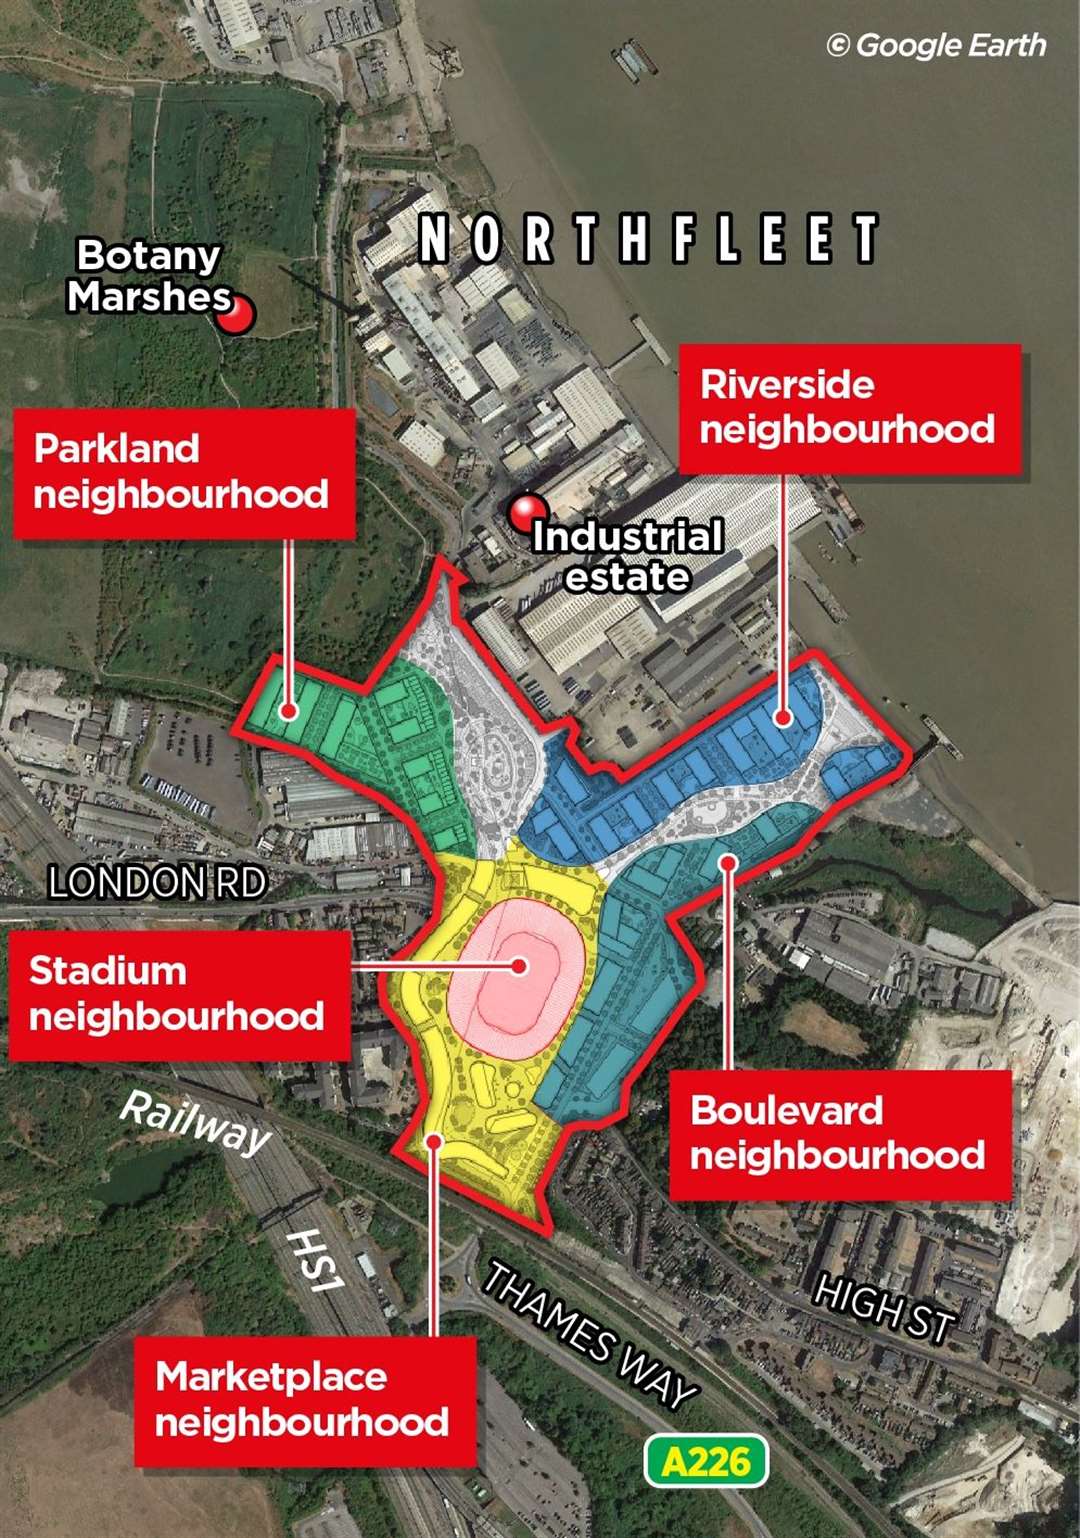 The development will be split into neighbourhoods